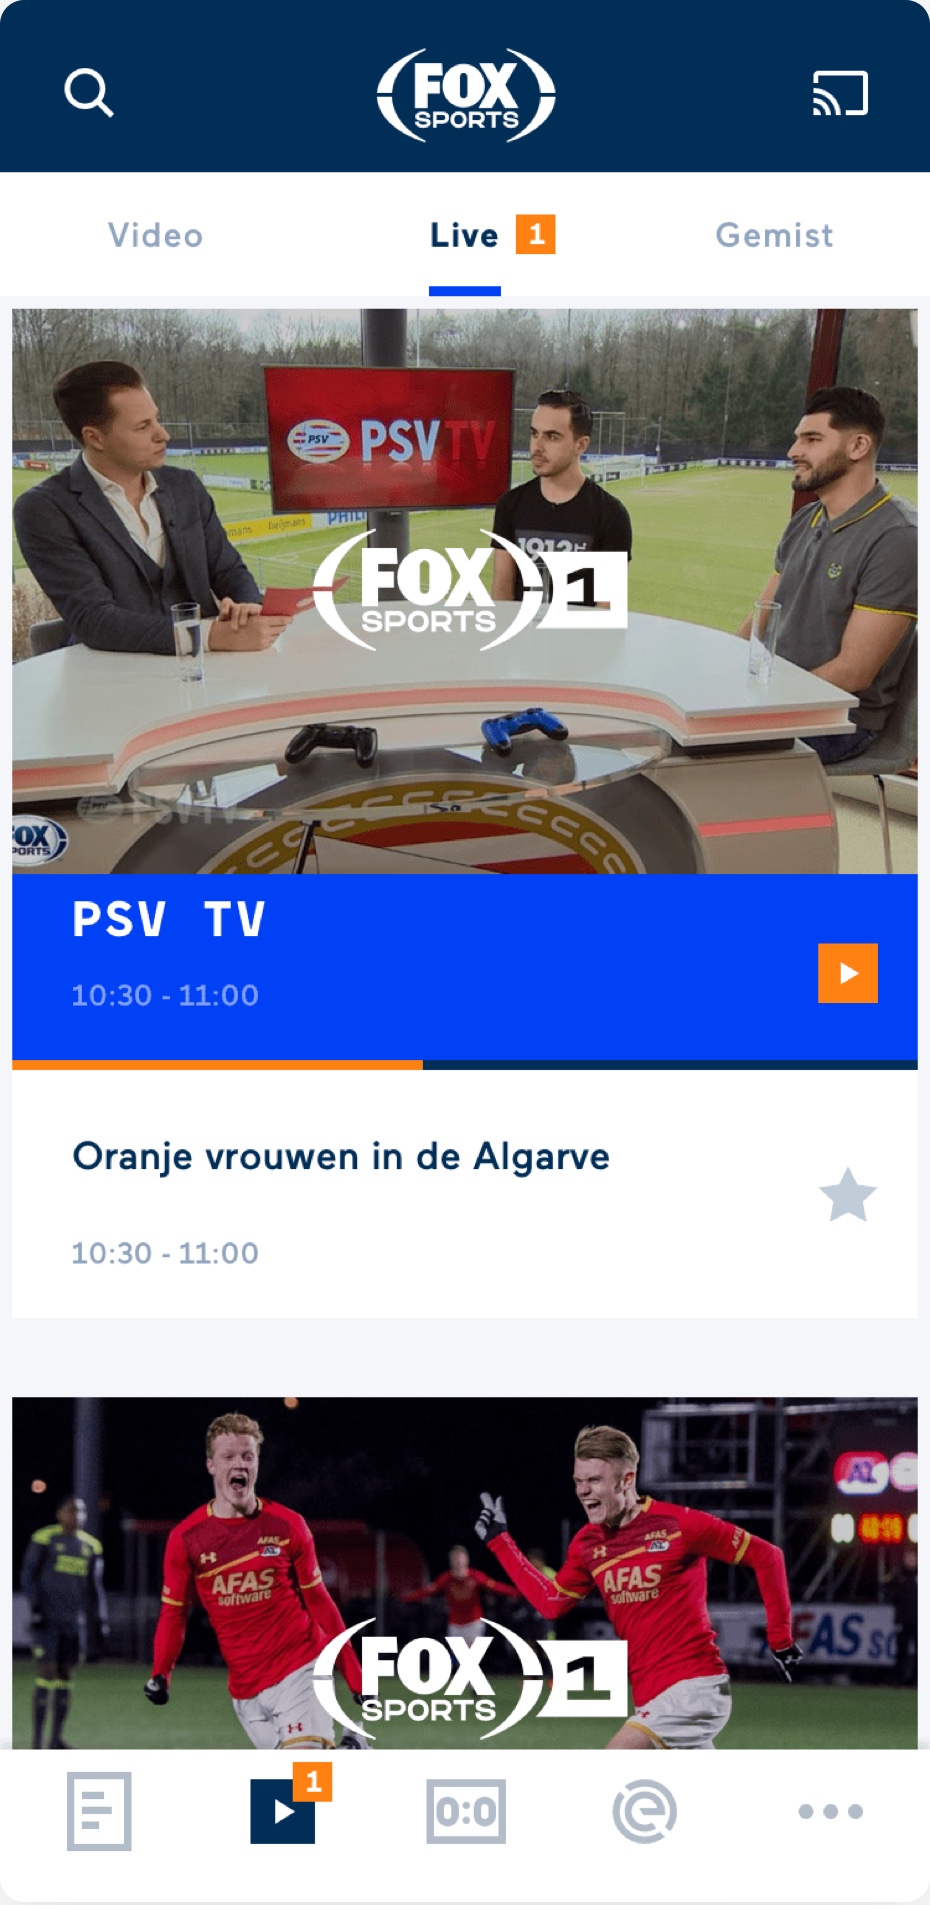 FOX Sports a digital translation of broadcast design Triple